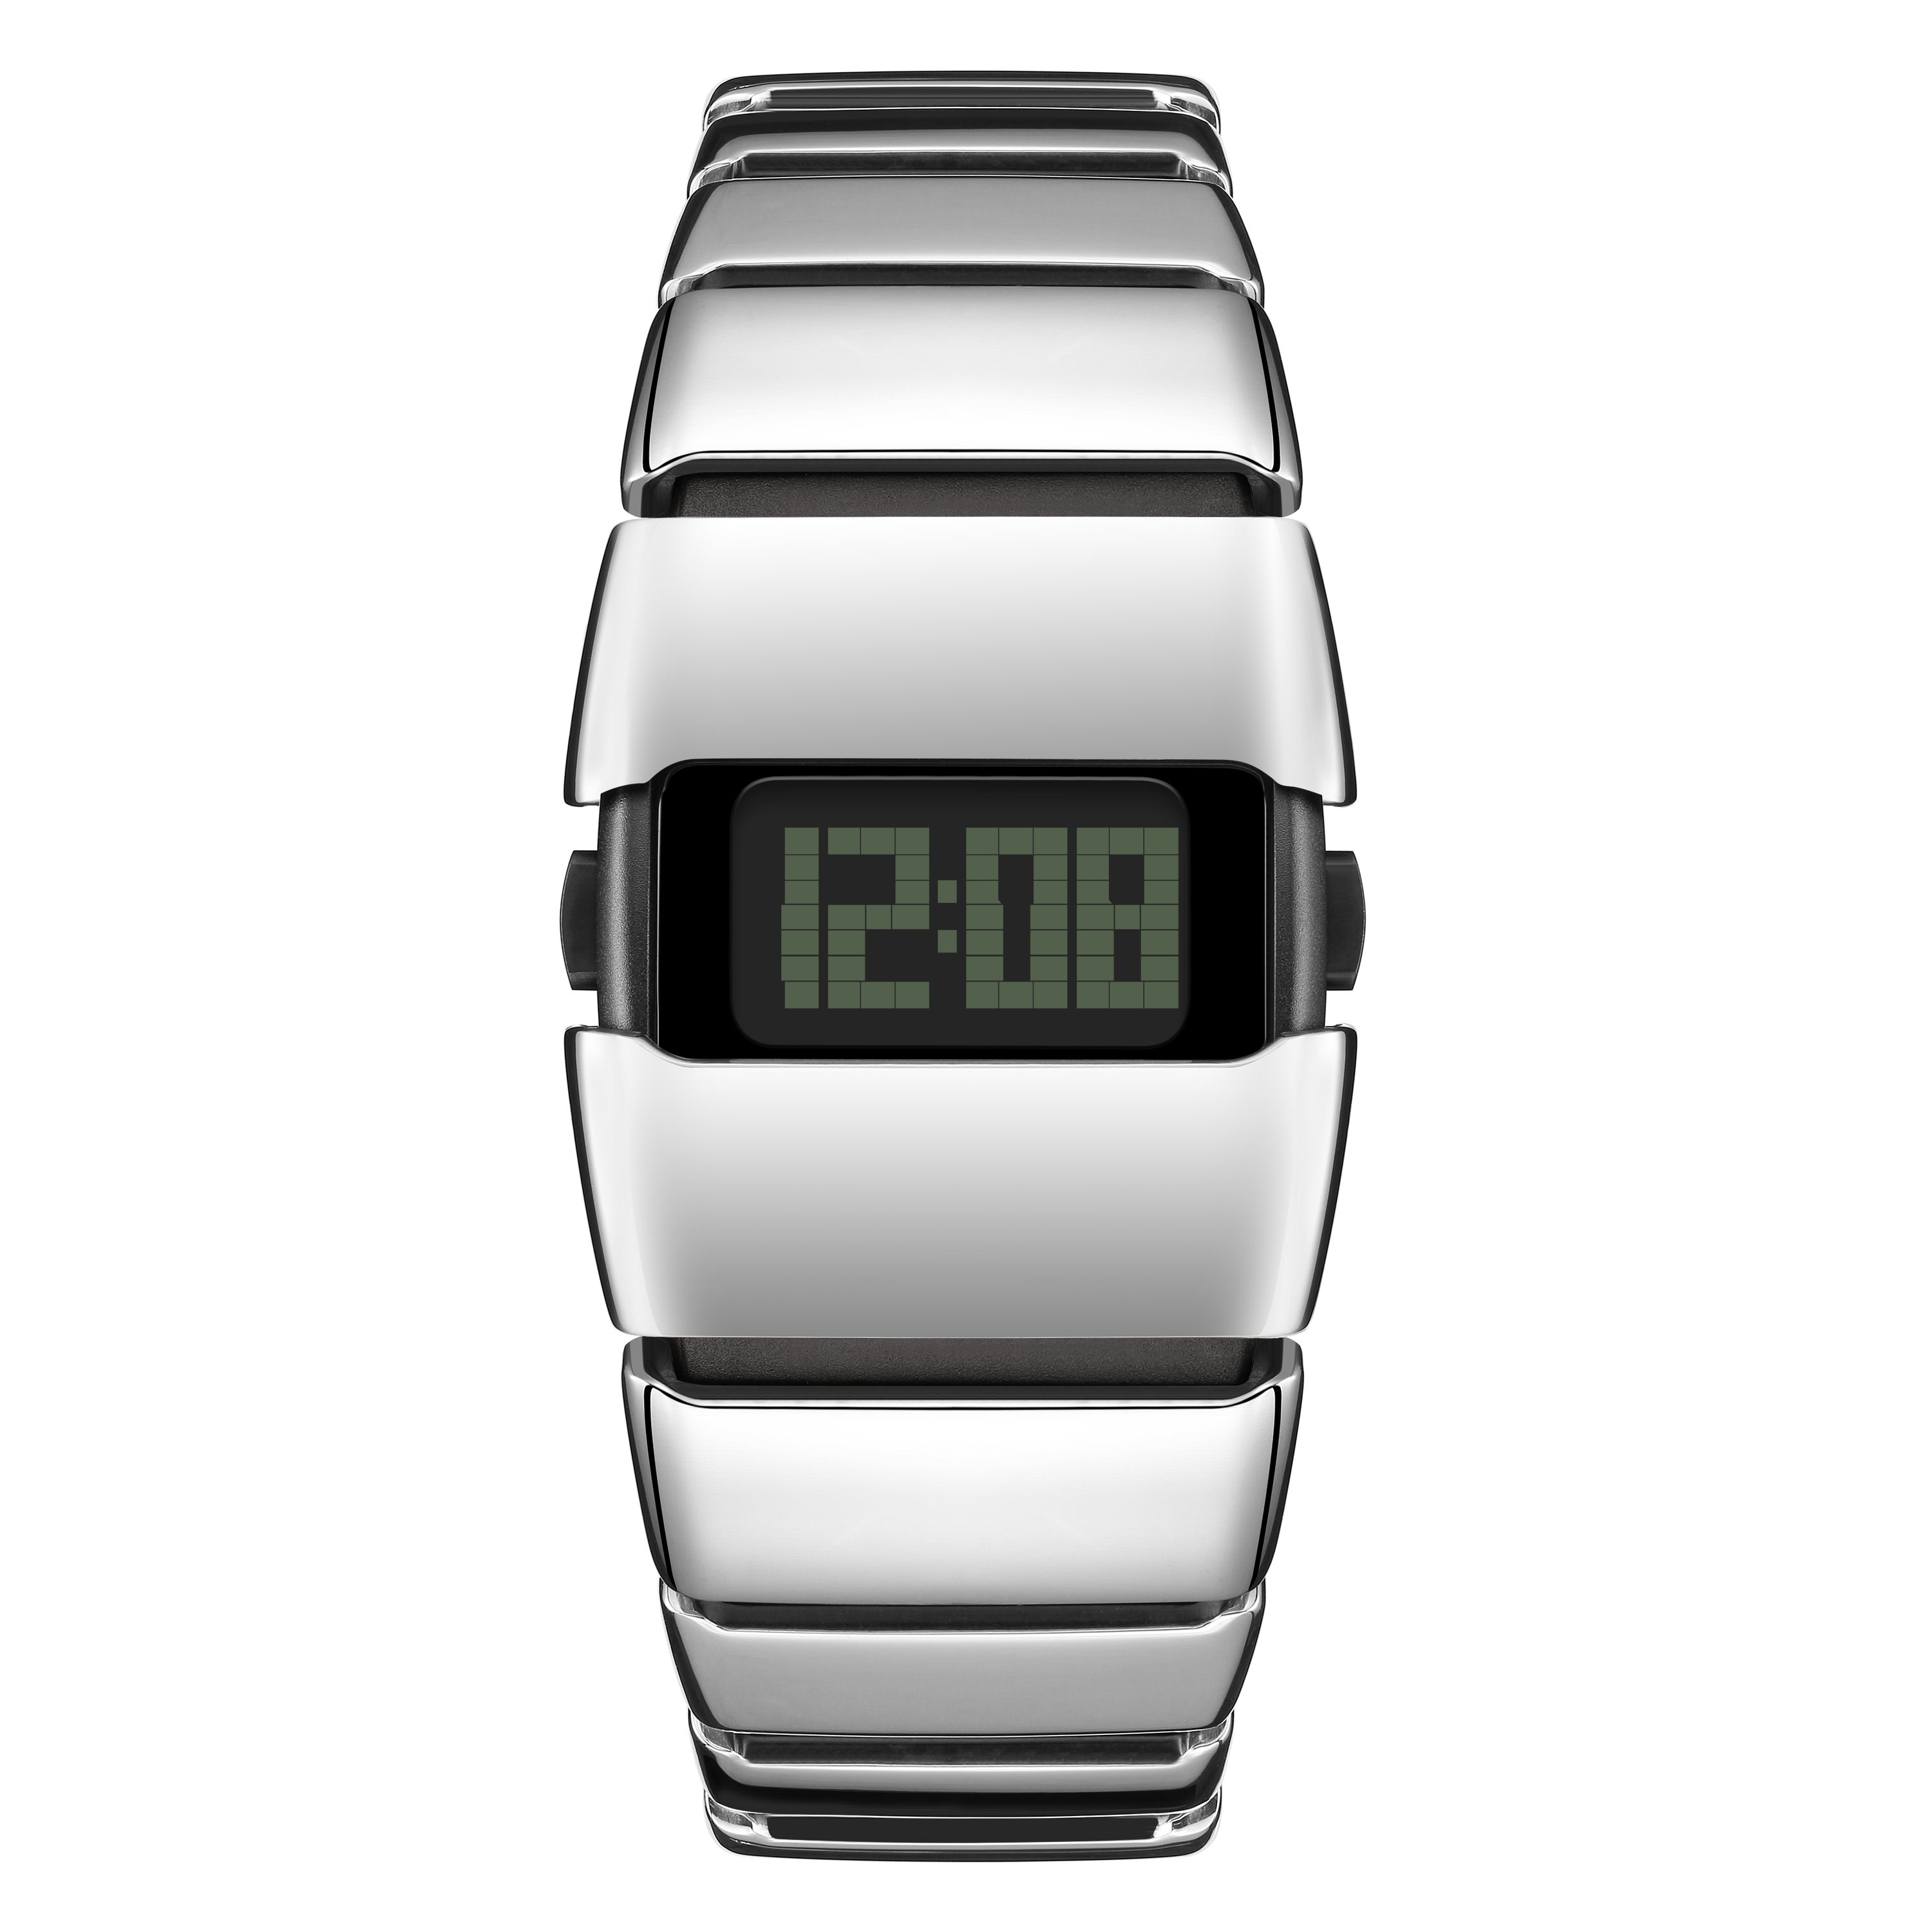 Retro-Futuristic Metal Unique Digital Watch-X6000S-Shiny